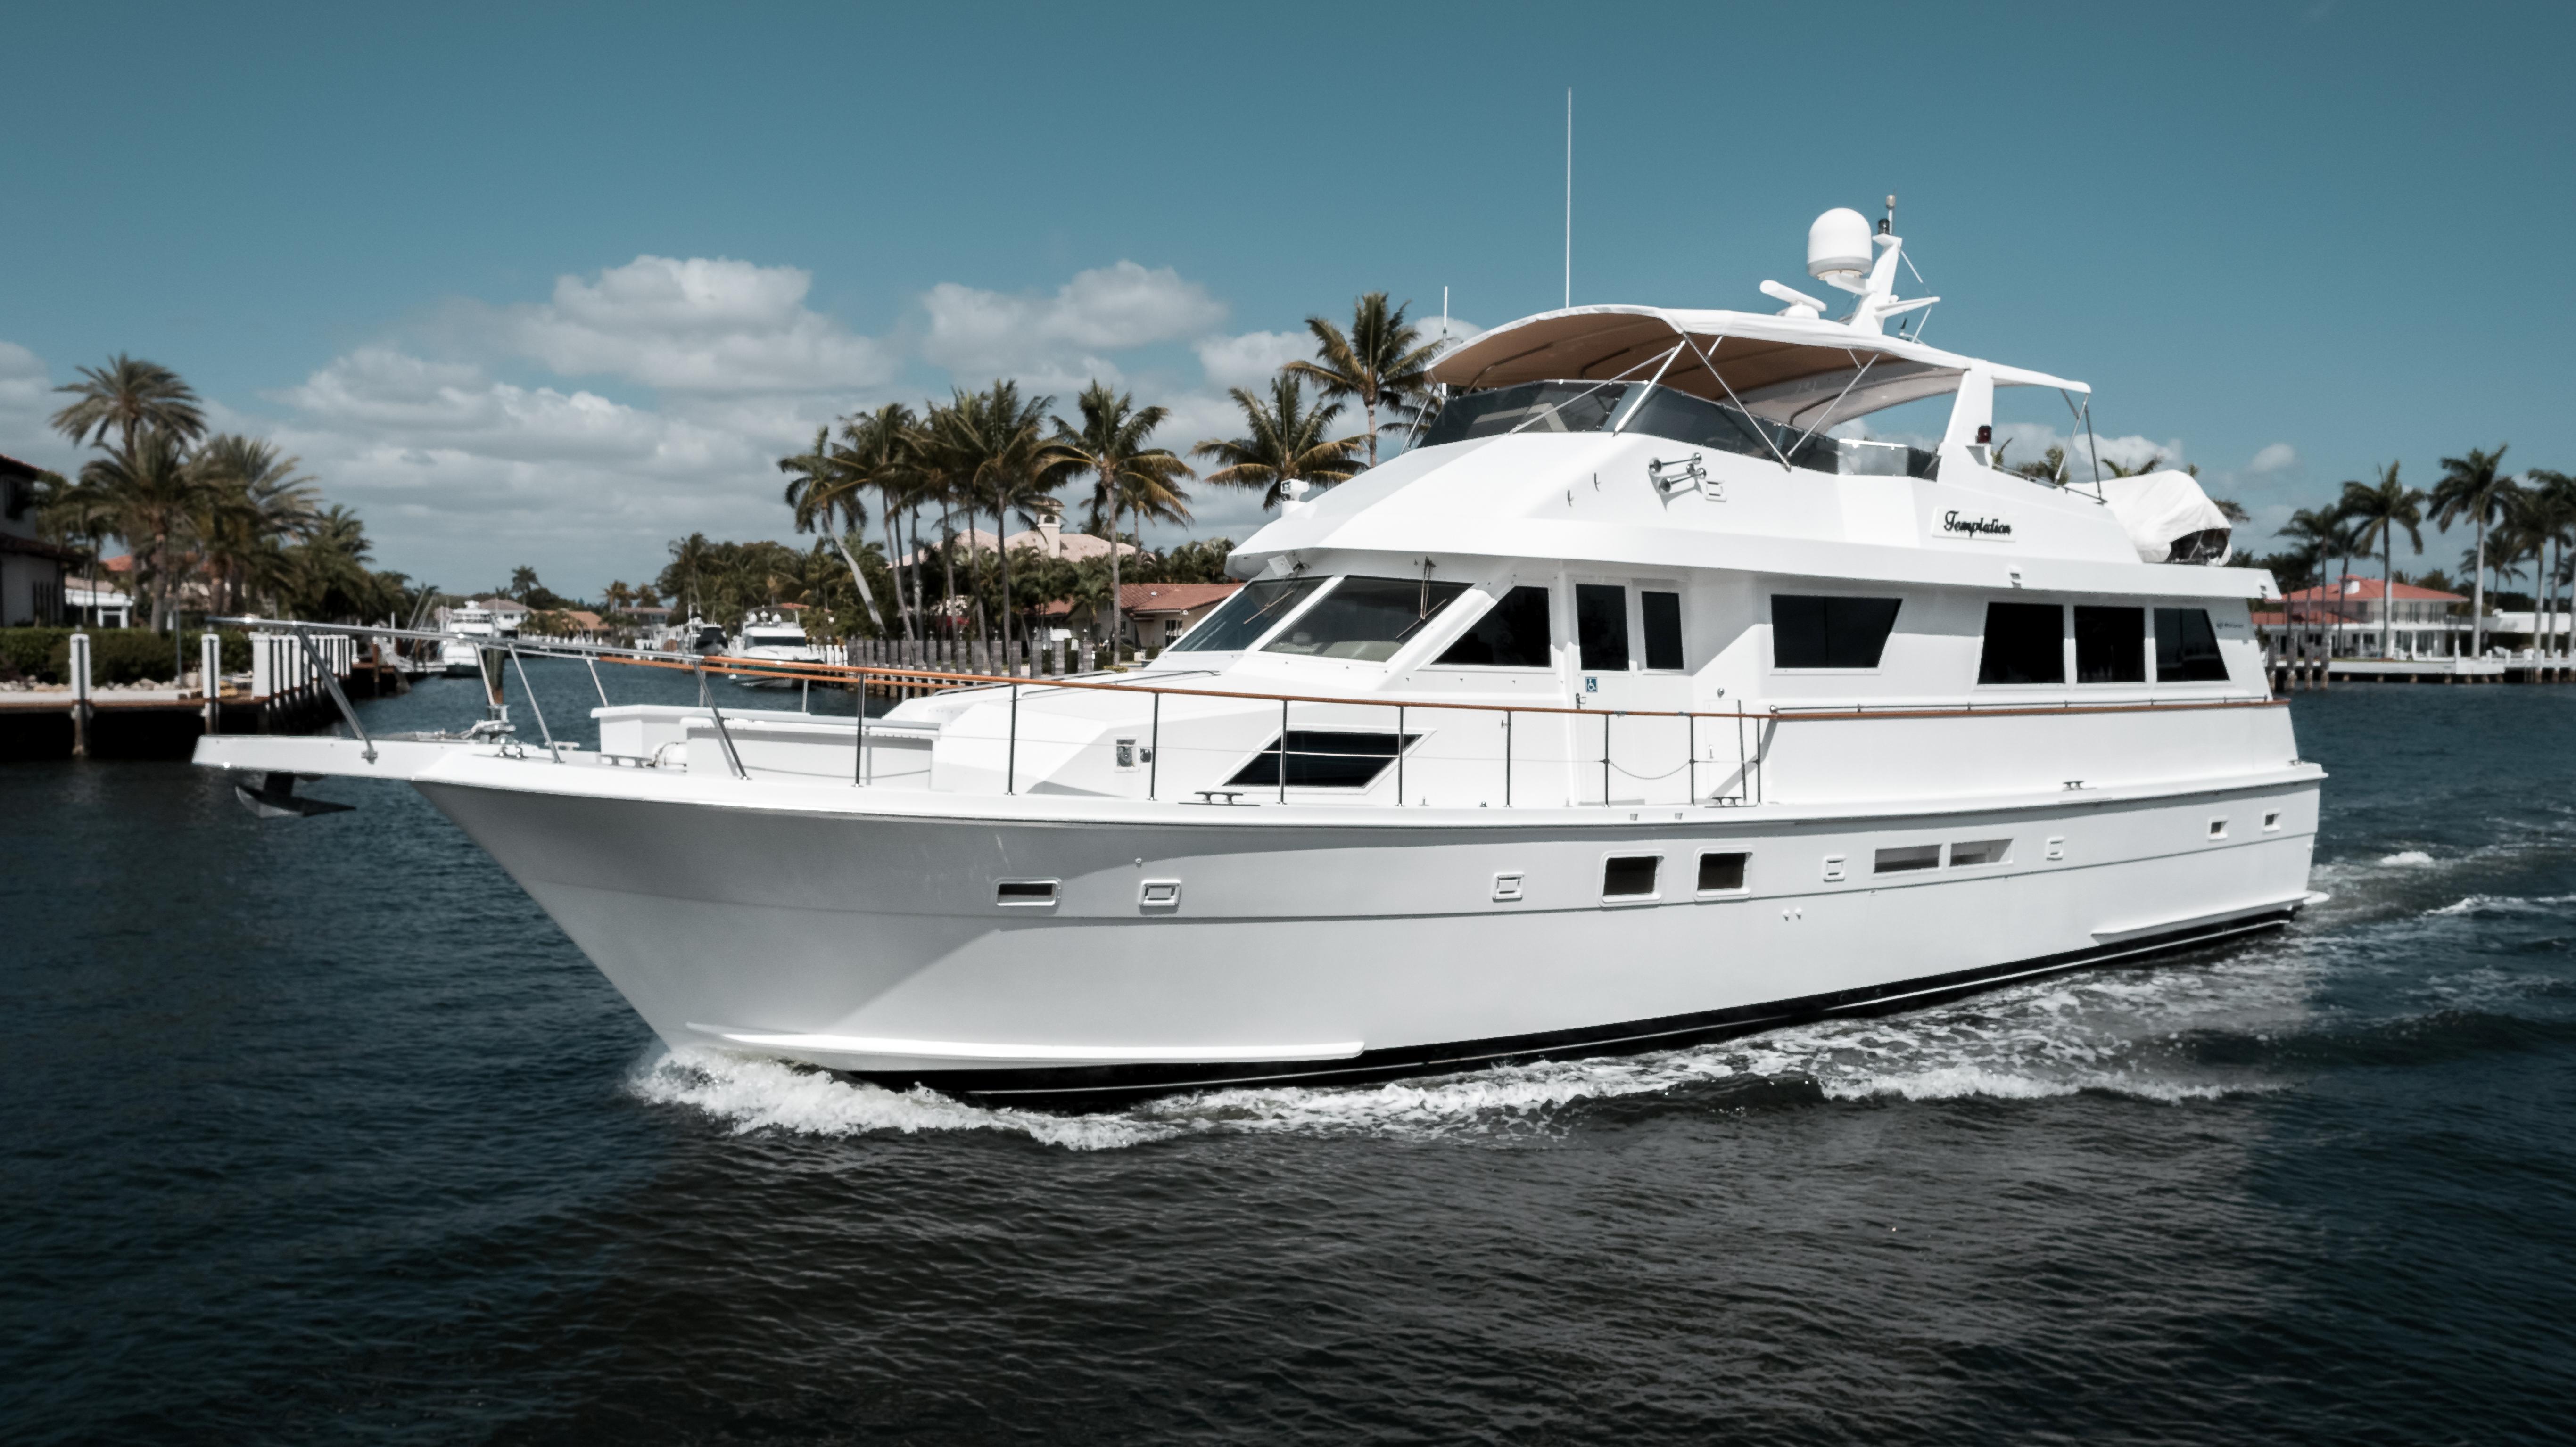 65 ft yacht price